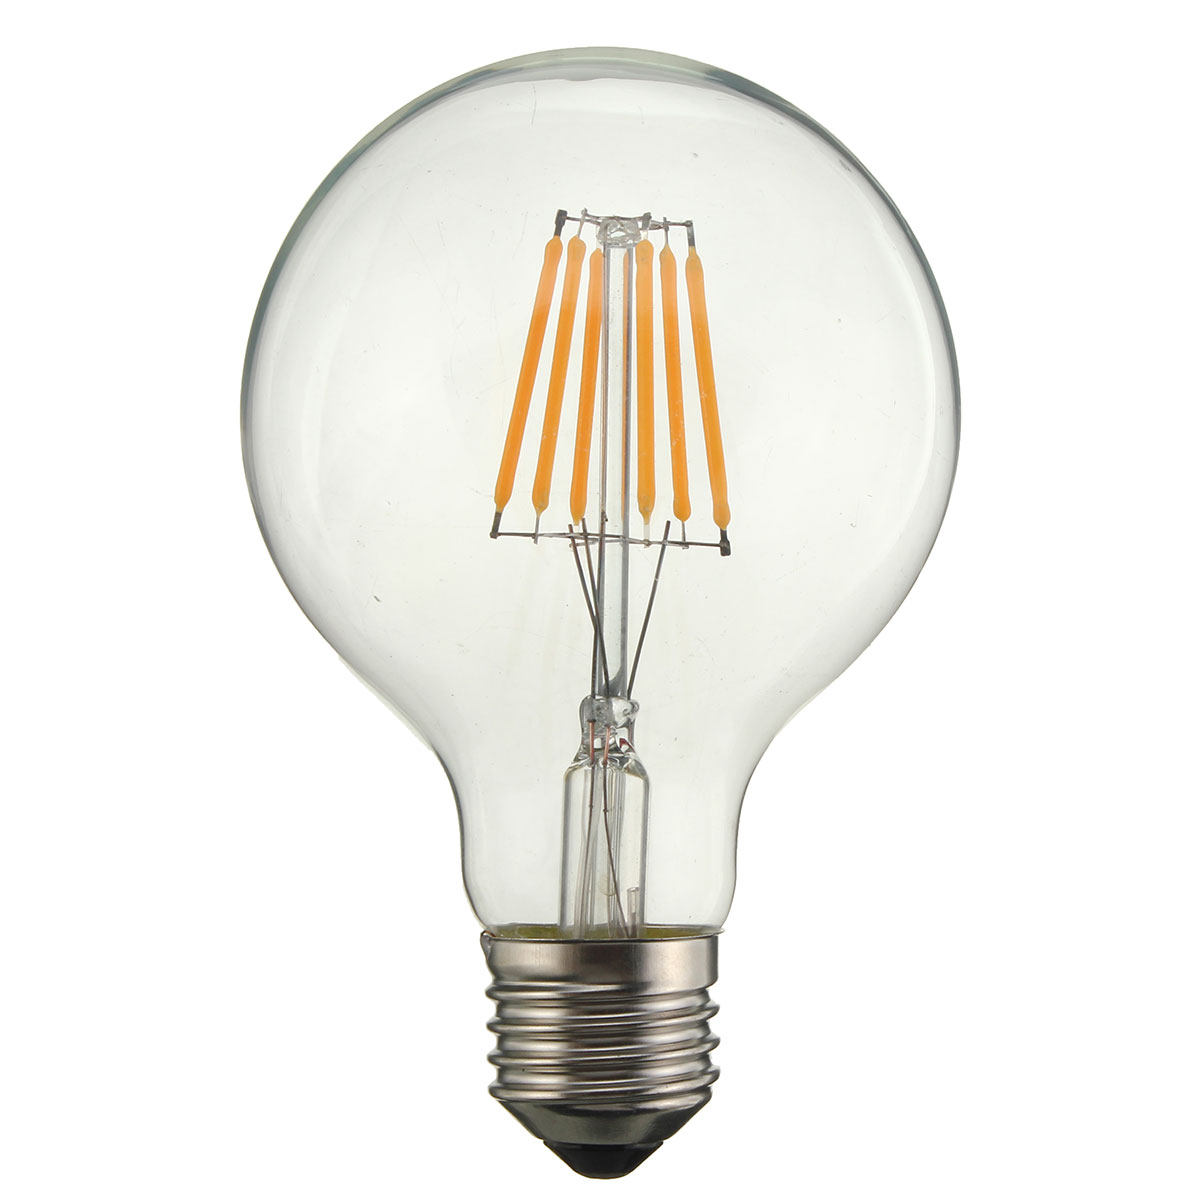 Dimmable-G80-E27-6W-COB-Warm-White-600Lumens-Retro-Vintage-Light-Lamp-Bulb-AC110V-AC220V-1074483-9